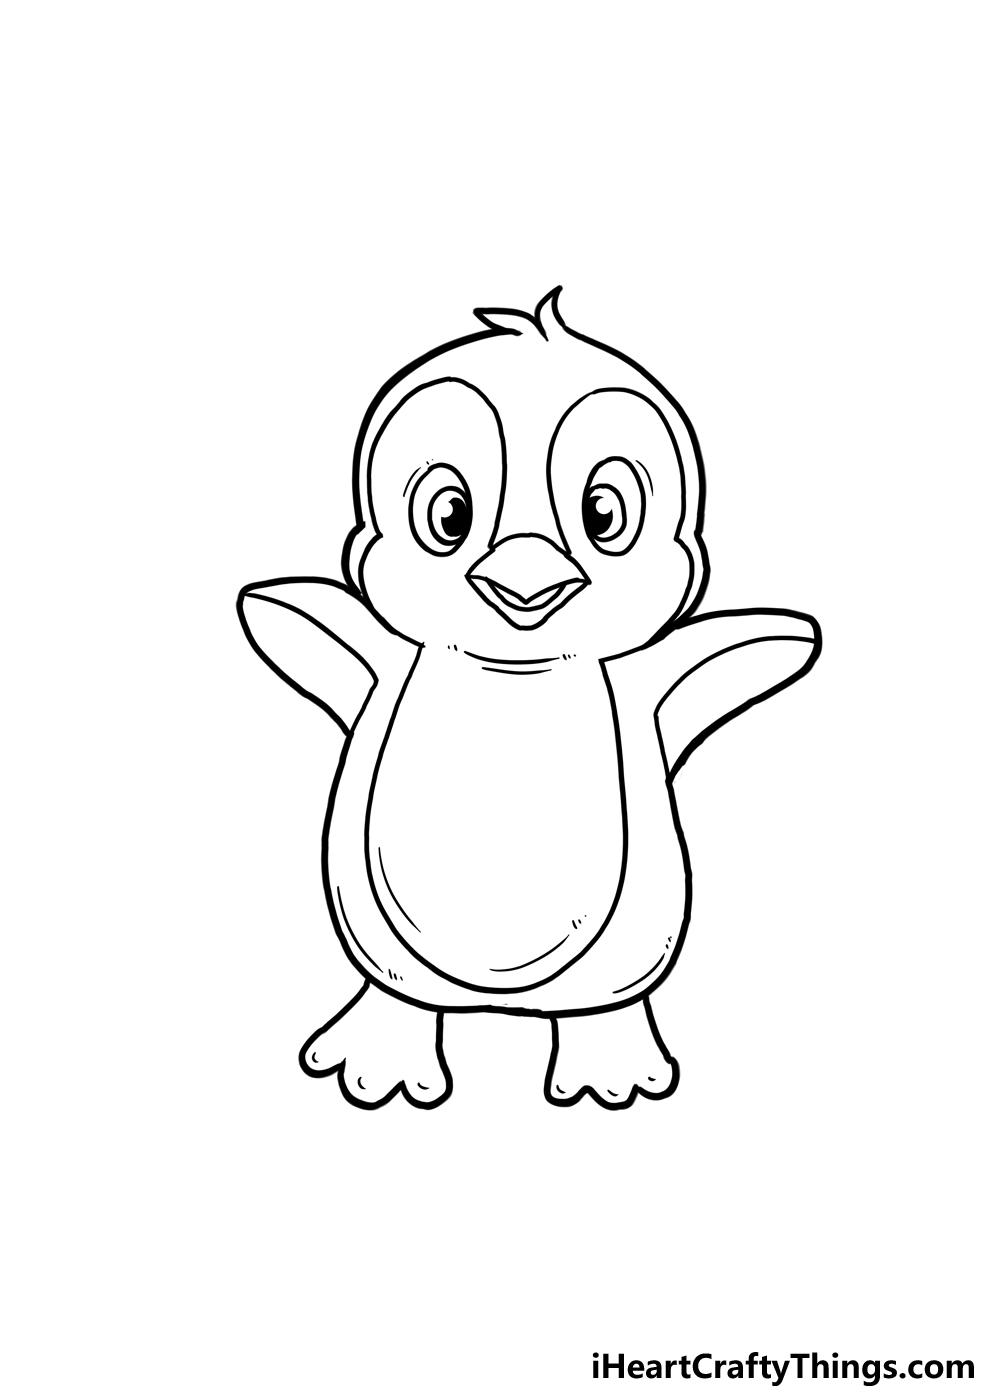 How to Draw A Cartoon Penguin step 5